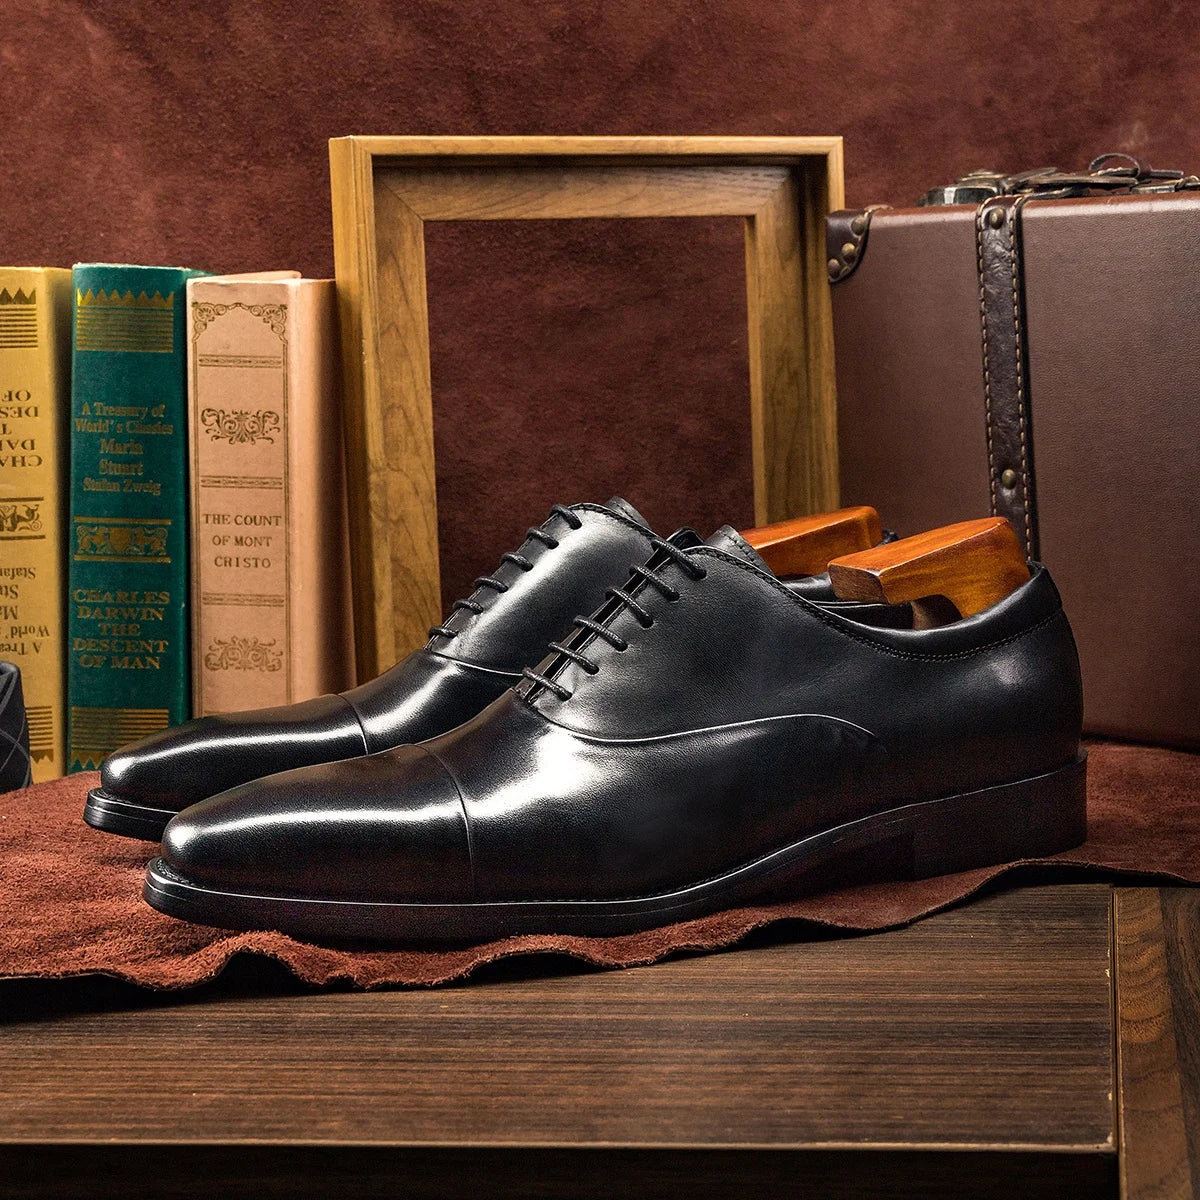 Oxford formelle Schuhe aus echtem Leder